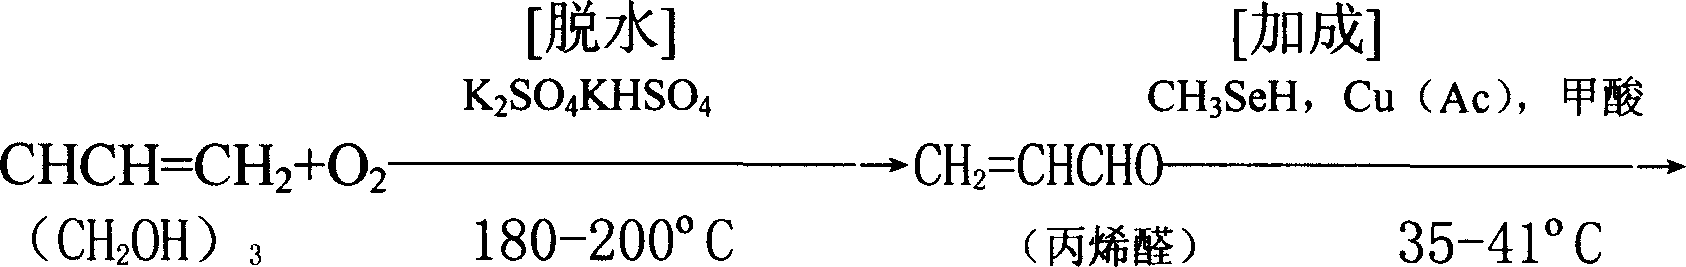 Methyleneseleno propanel method for preparing selenoic methionine